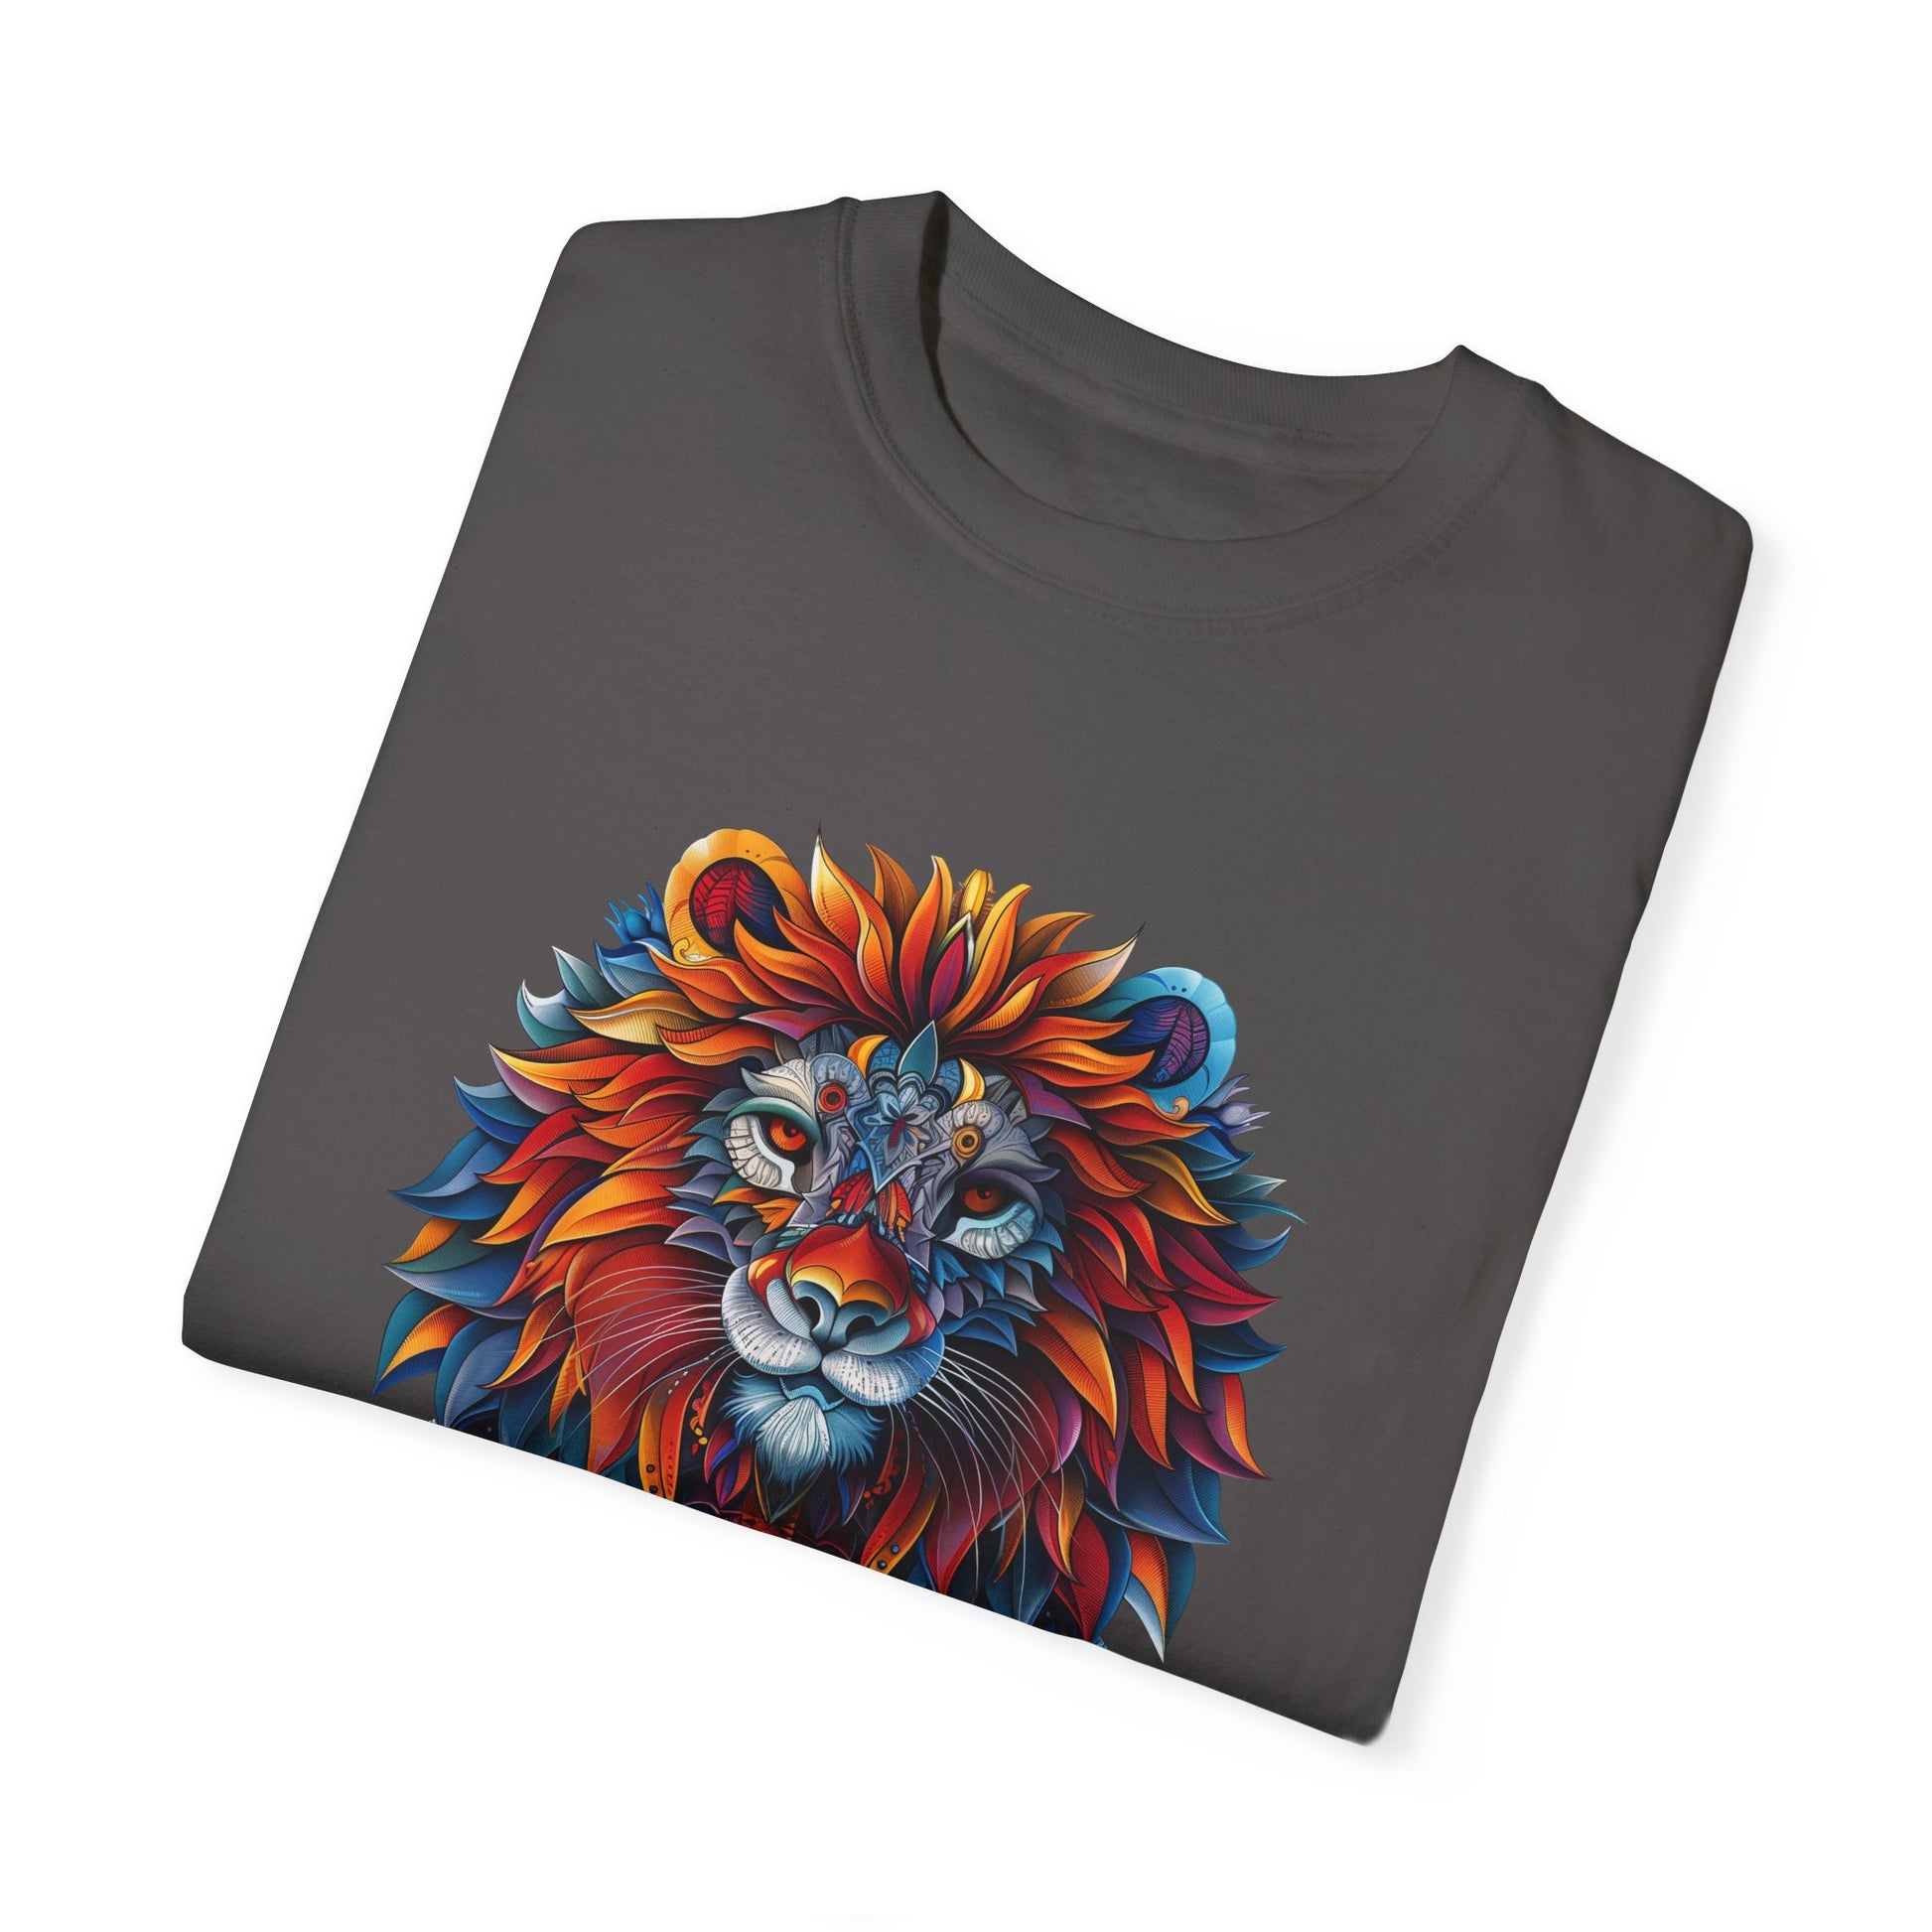 Lion Head Cool Graphic Design Novelty Unisex Garment-dyed T-shirt Cotton Funny Humorous Graphic Soft Premium Unisex Men Women Graphite T-shirt Birthday Gift-38